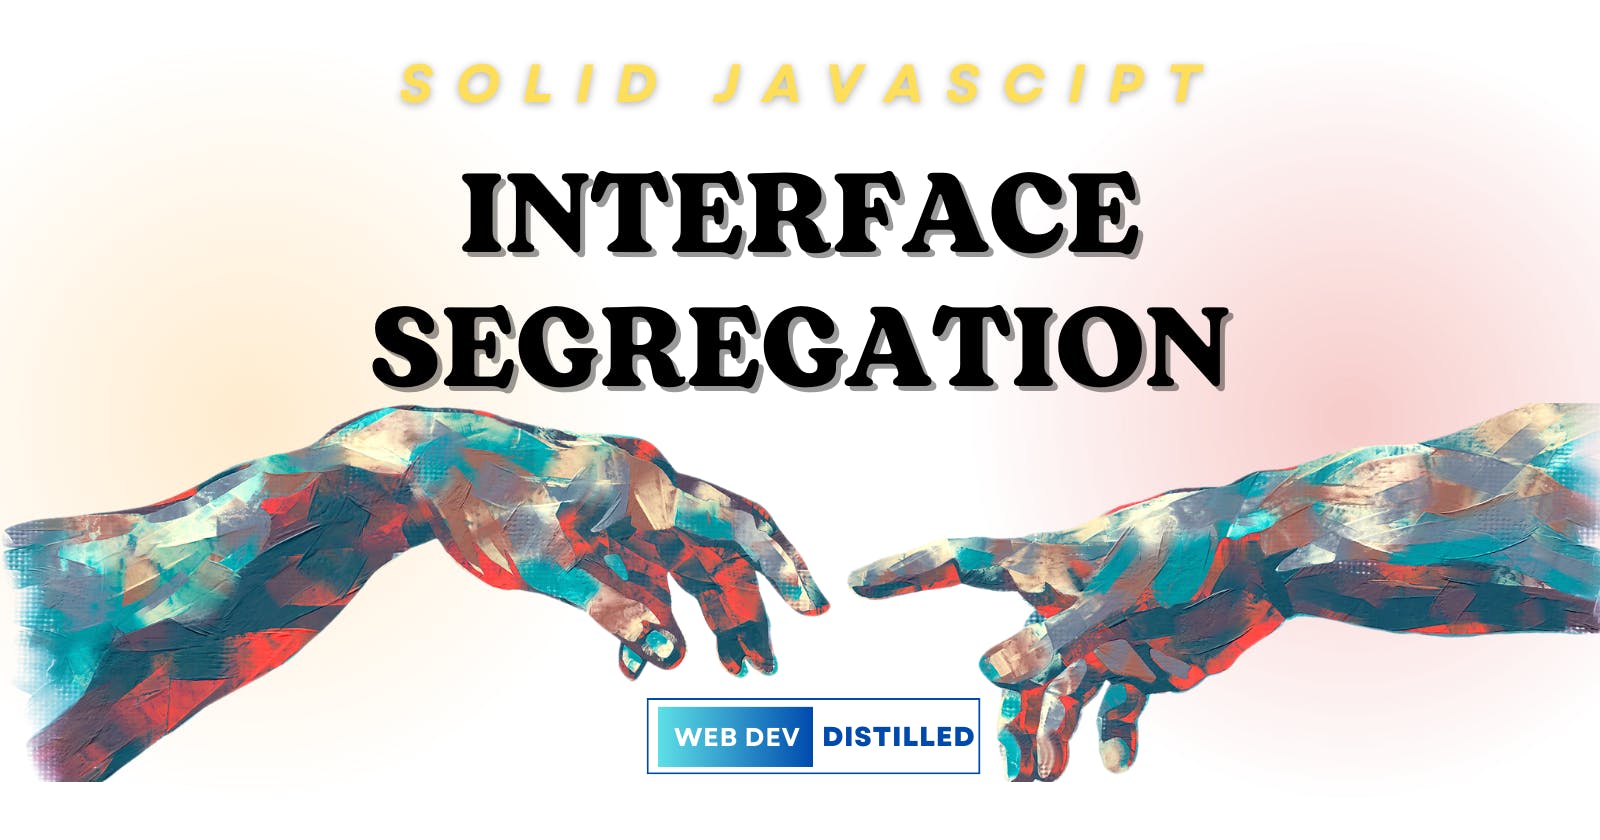 Interface Segregation Principle